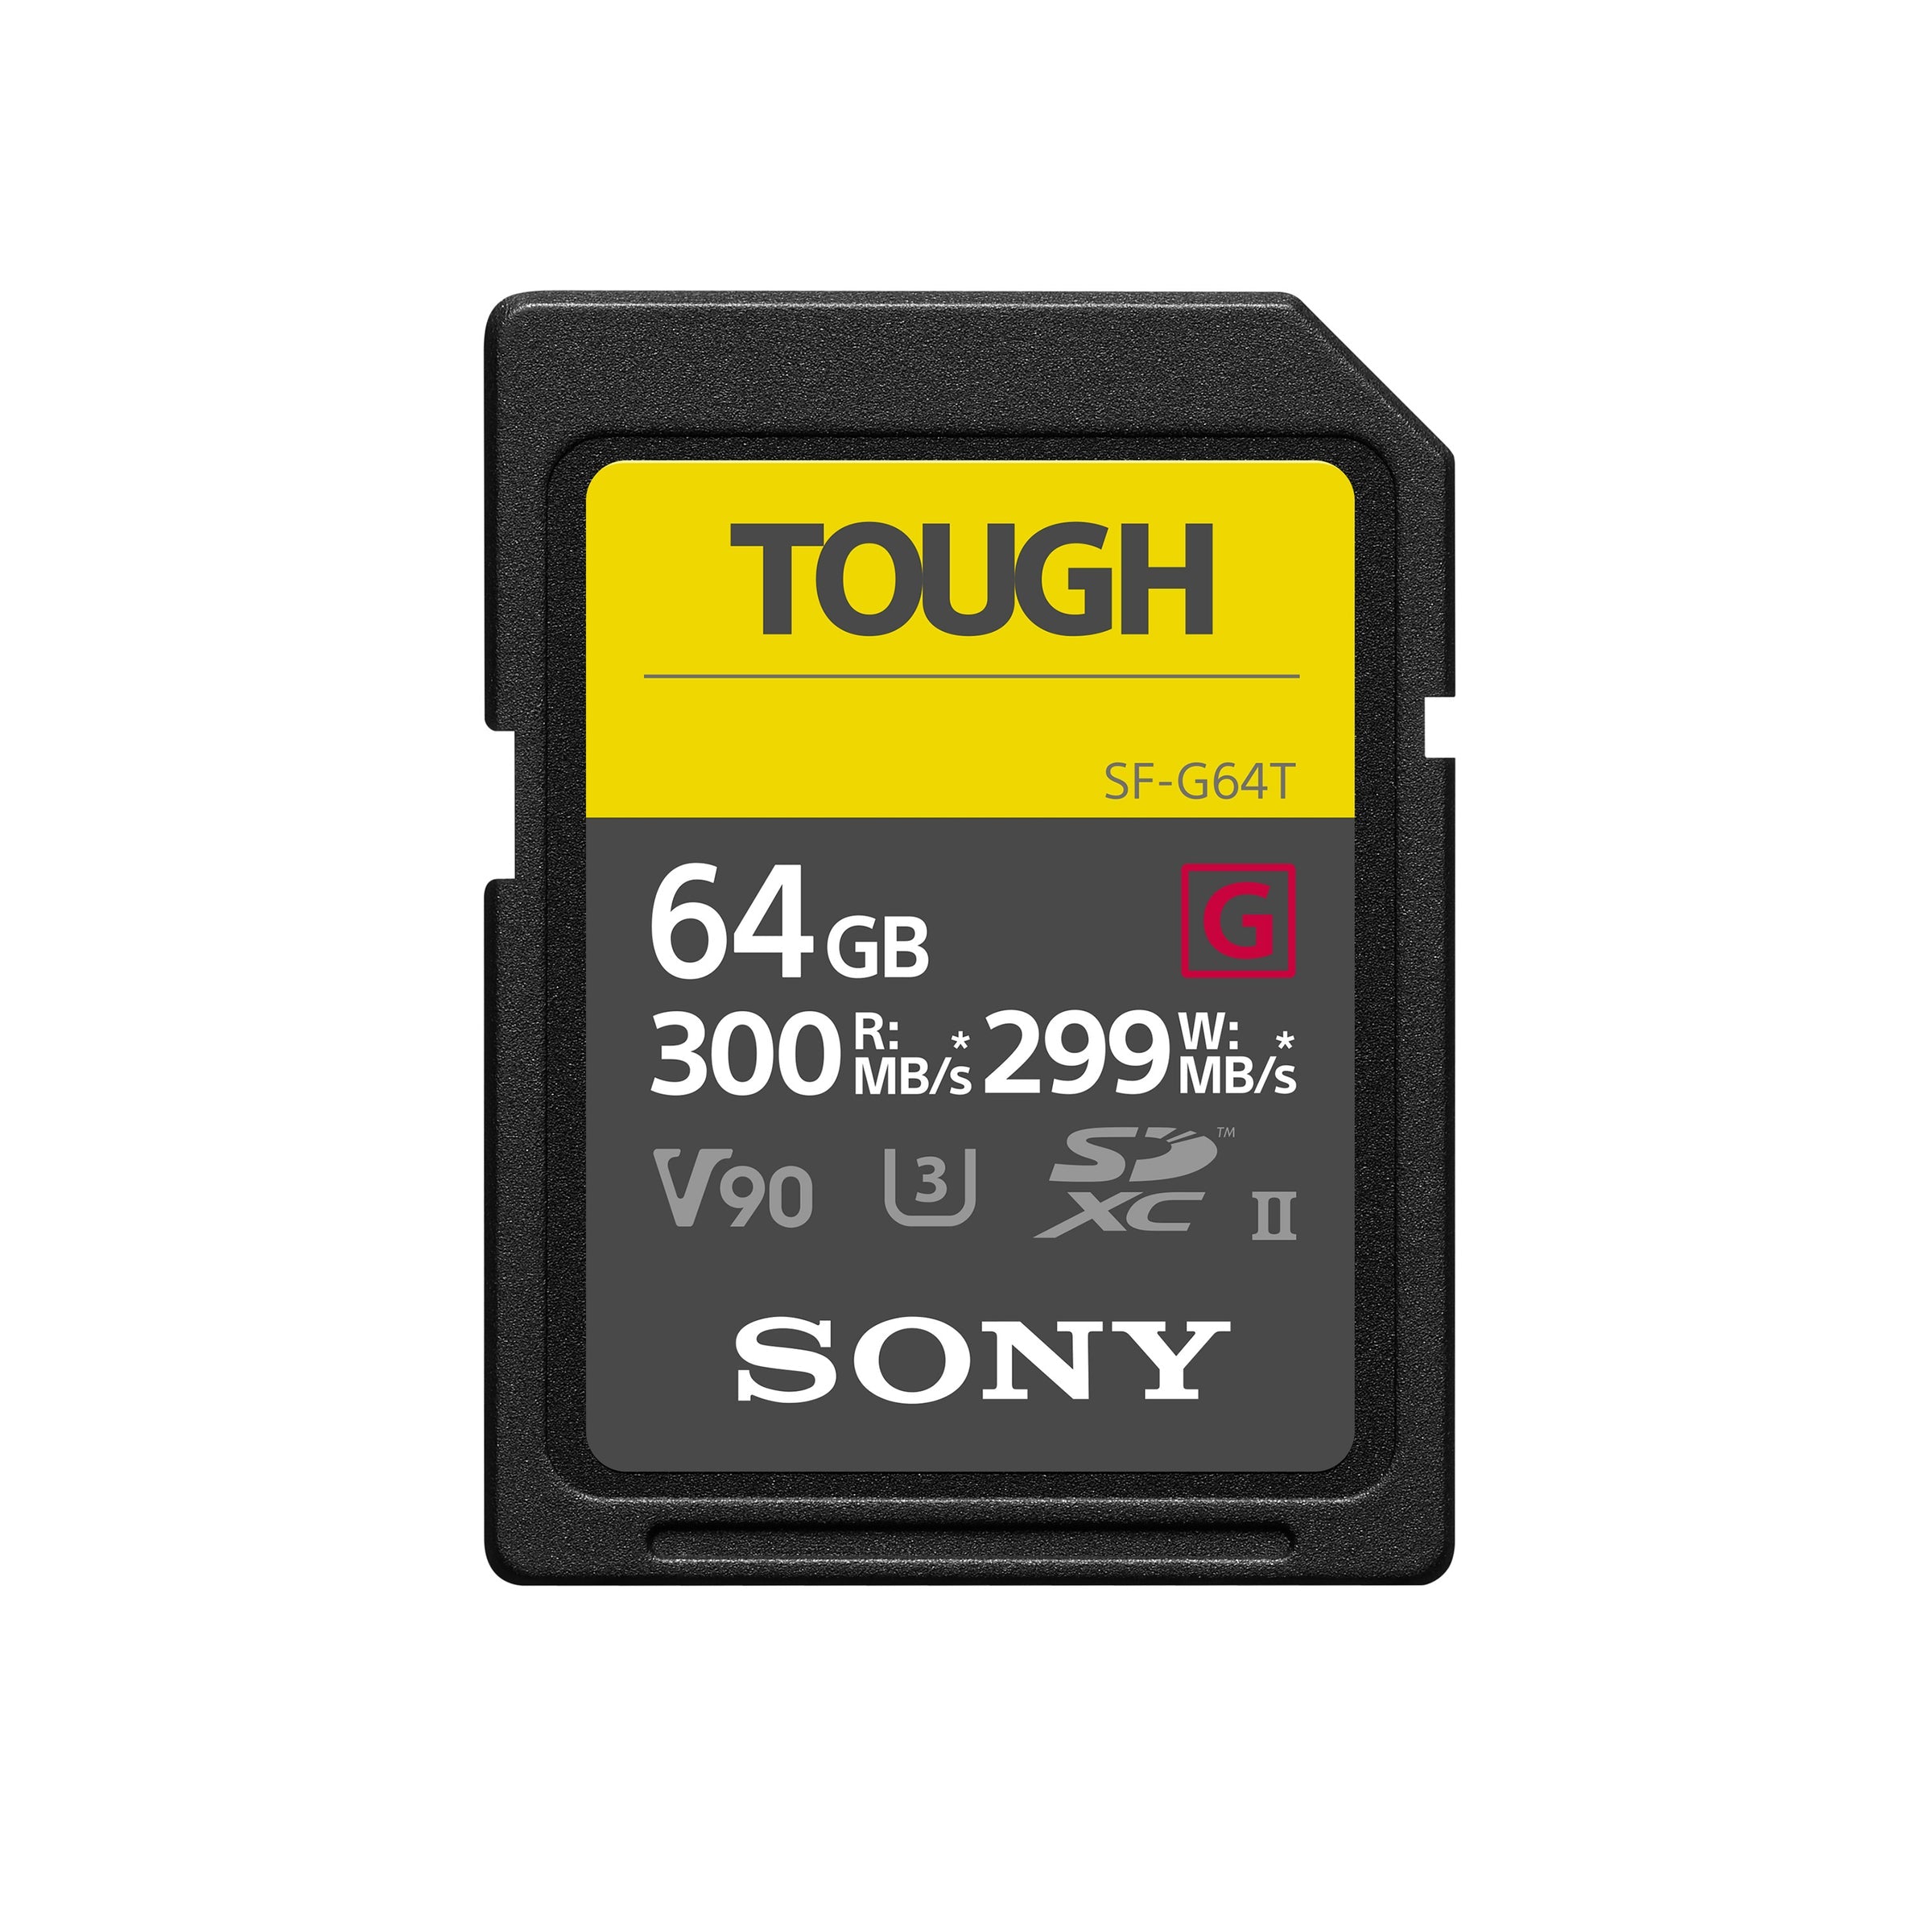 TOUGH G Series UHS-II SDXC Memory Card